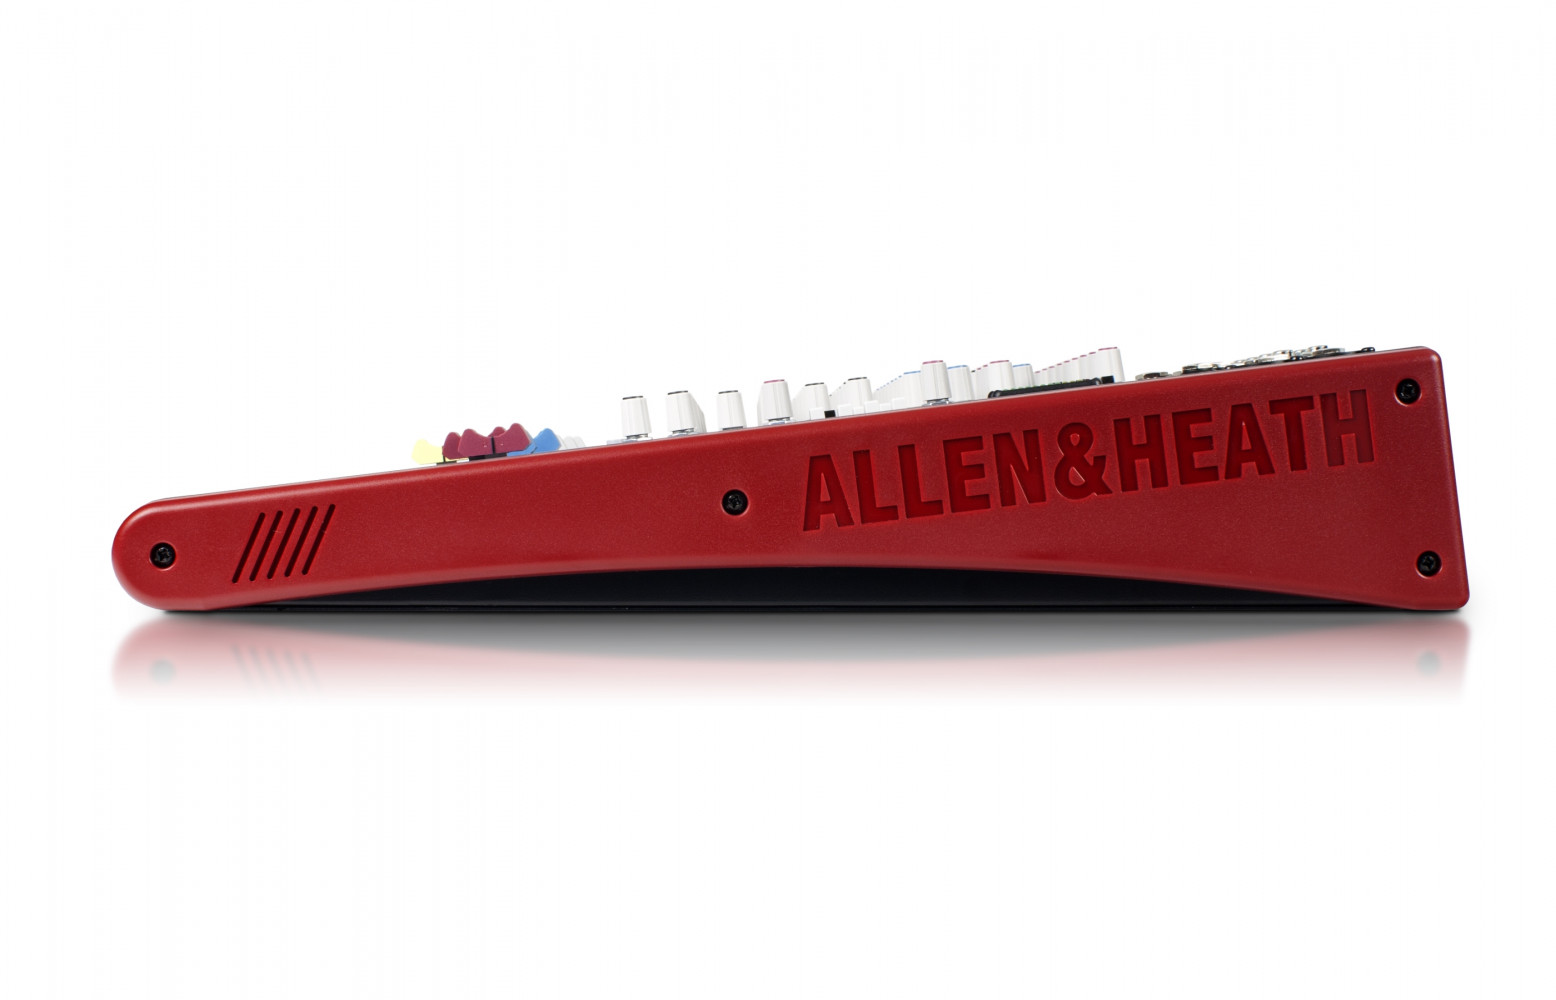 Allen & Heath ZED-22FX 22-Channel USB Mixer with Effects